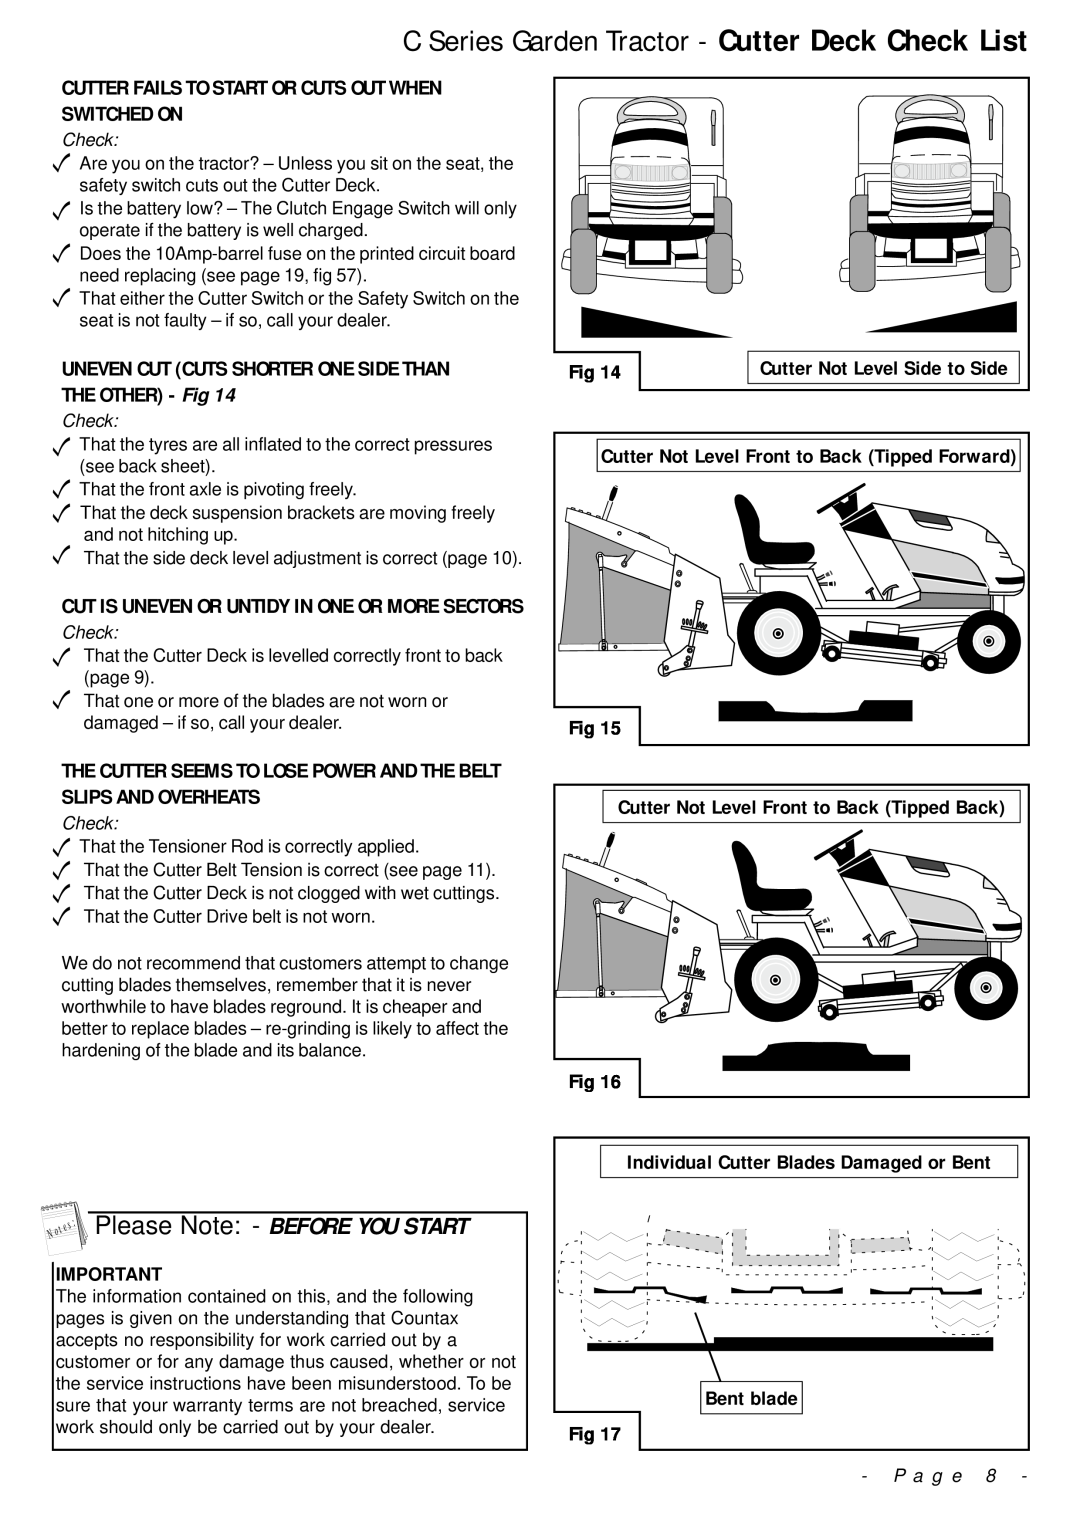 Countax manual C Series Garden Tractor - Cutter Deck Check List, Please Note - BEFORE YOU START, Bent blade, P a g e 